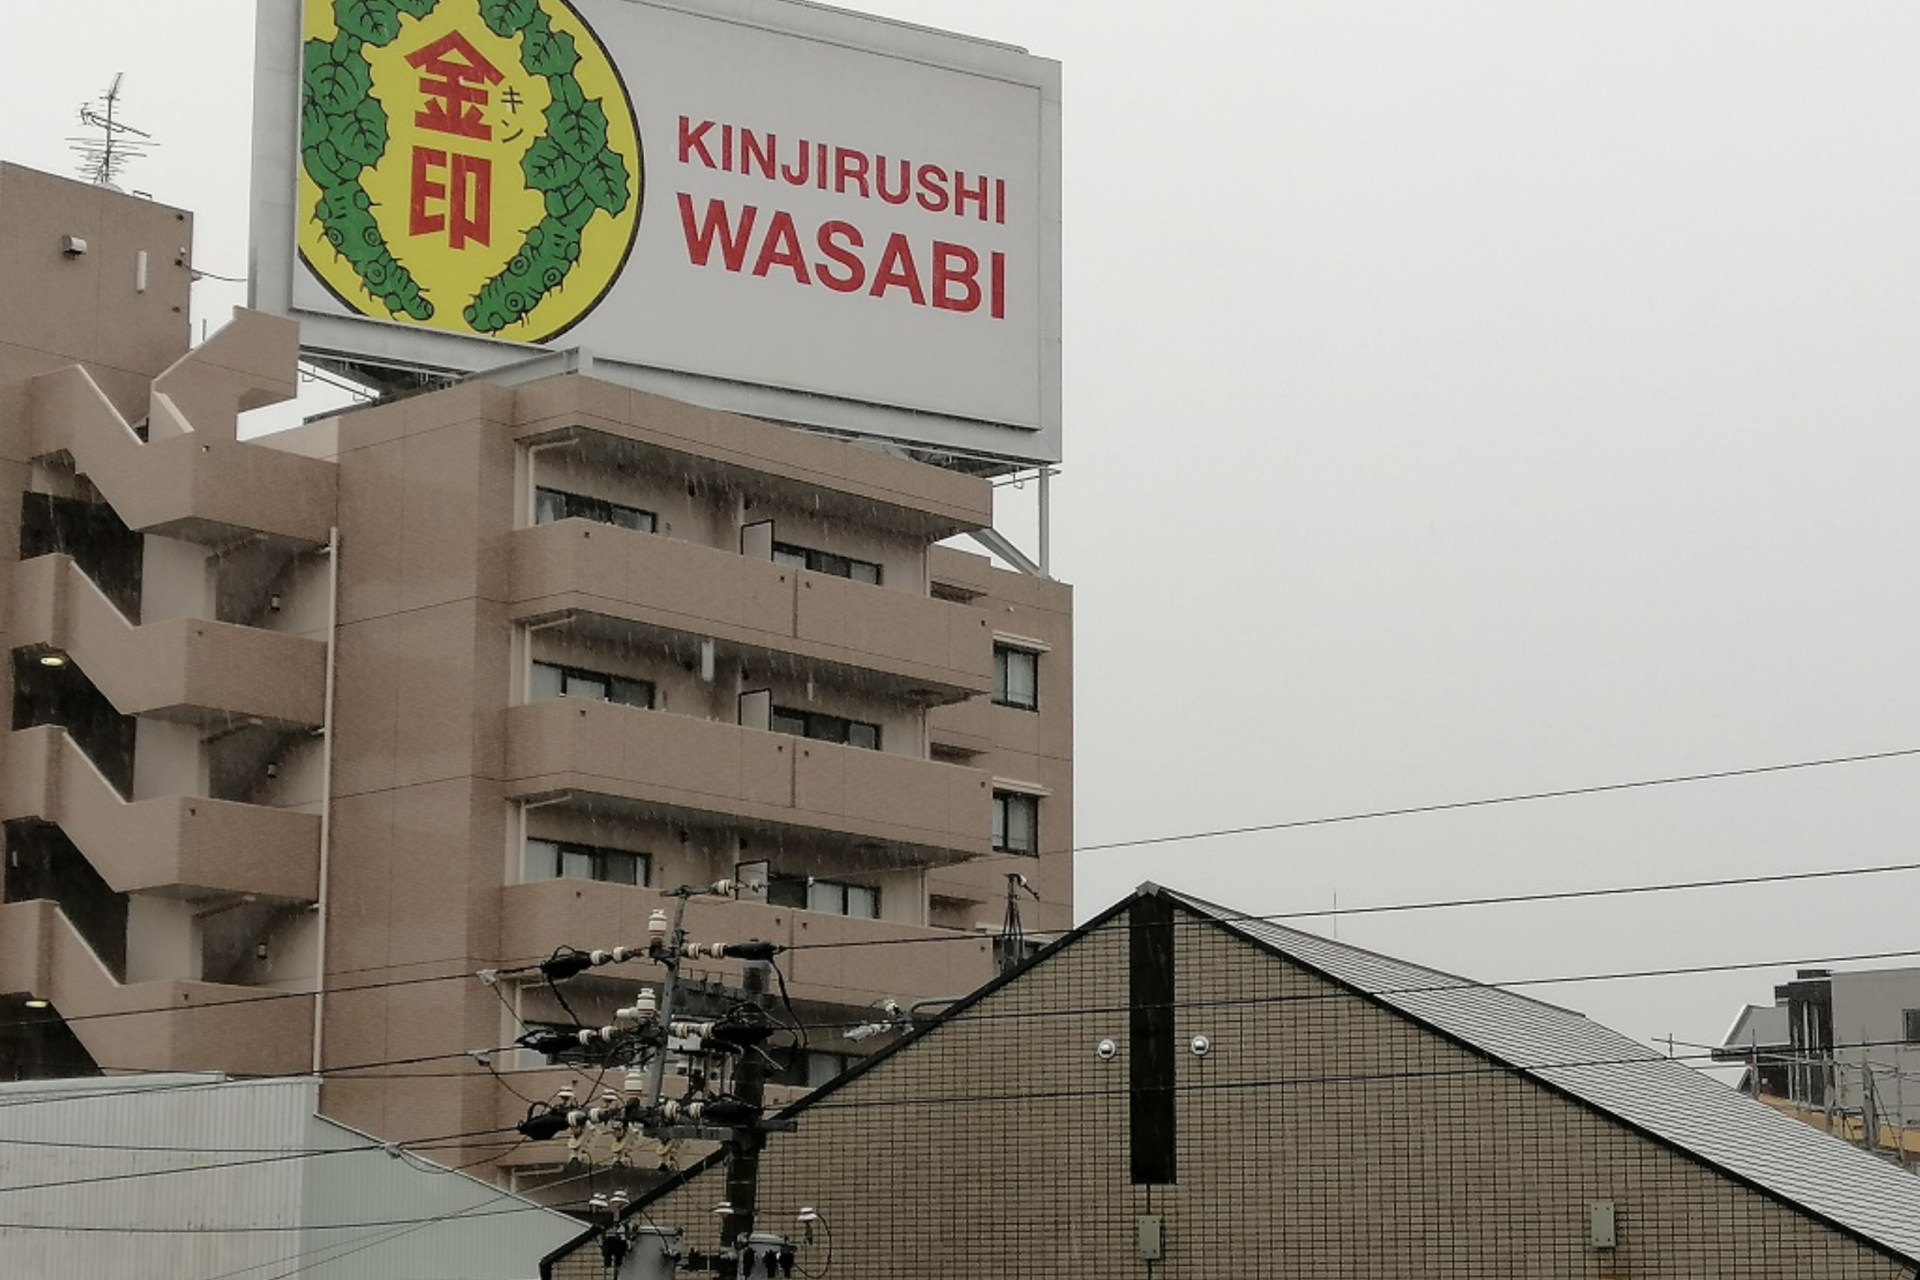 En collaboration avec un fabricant de wasabi